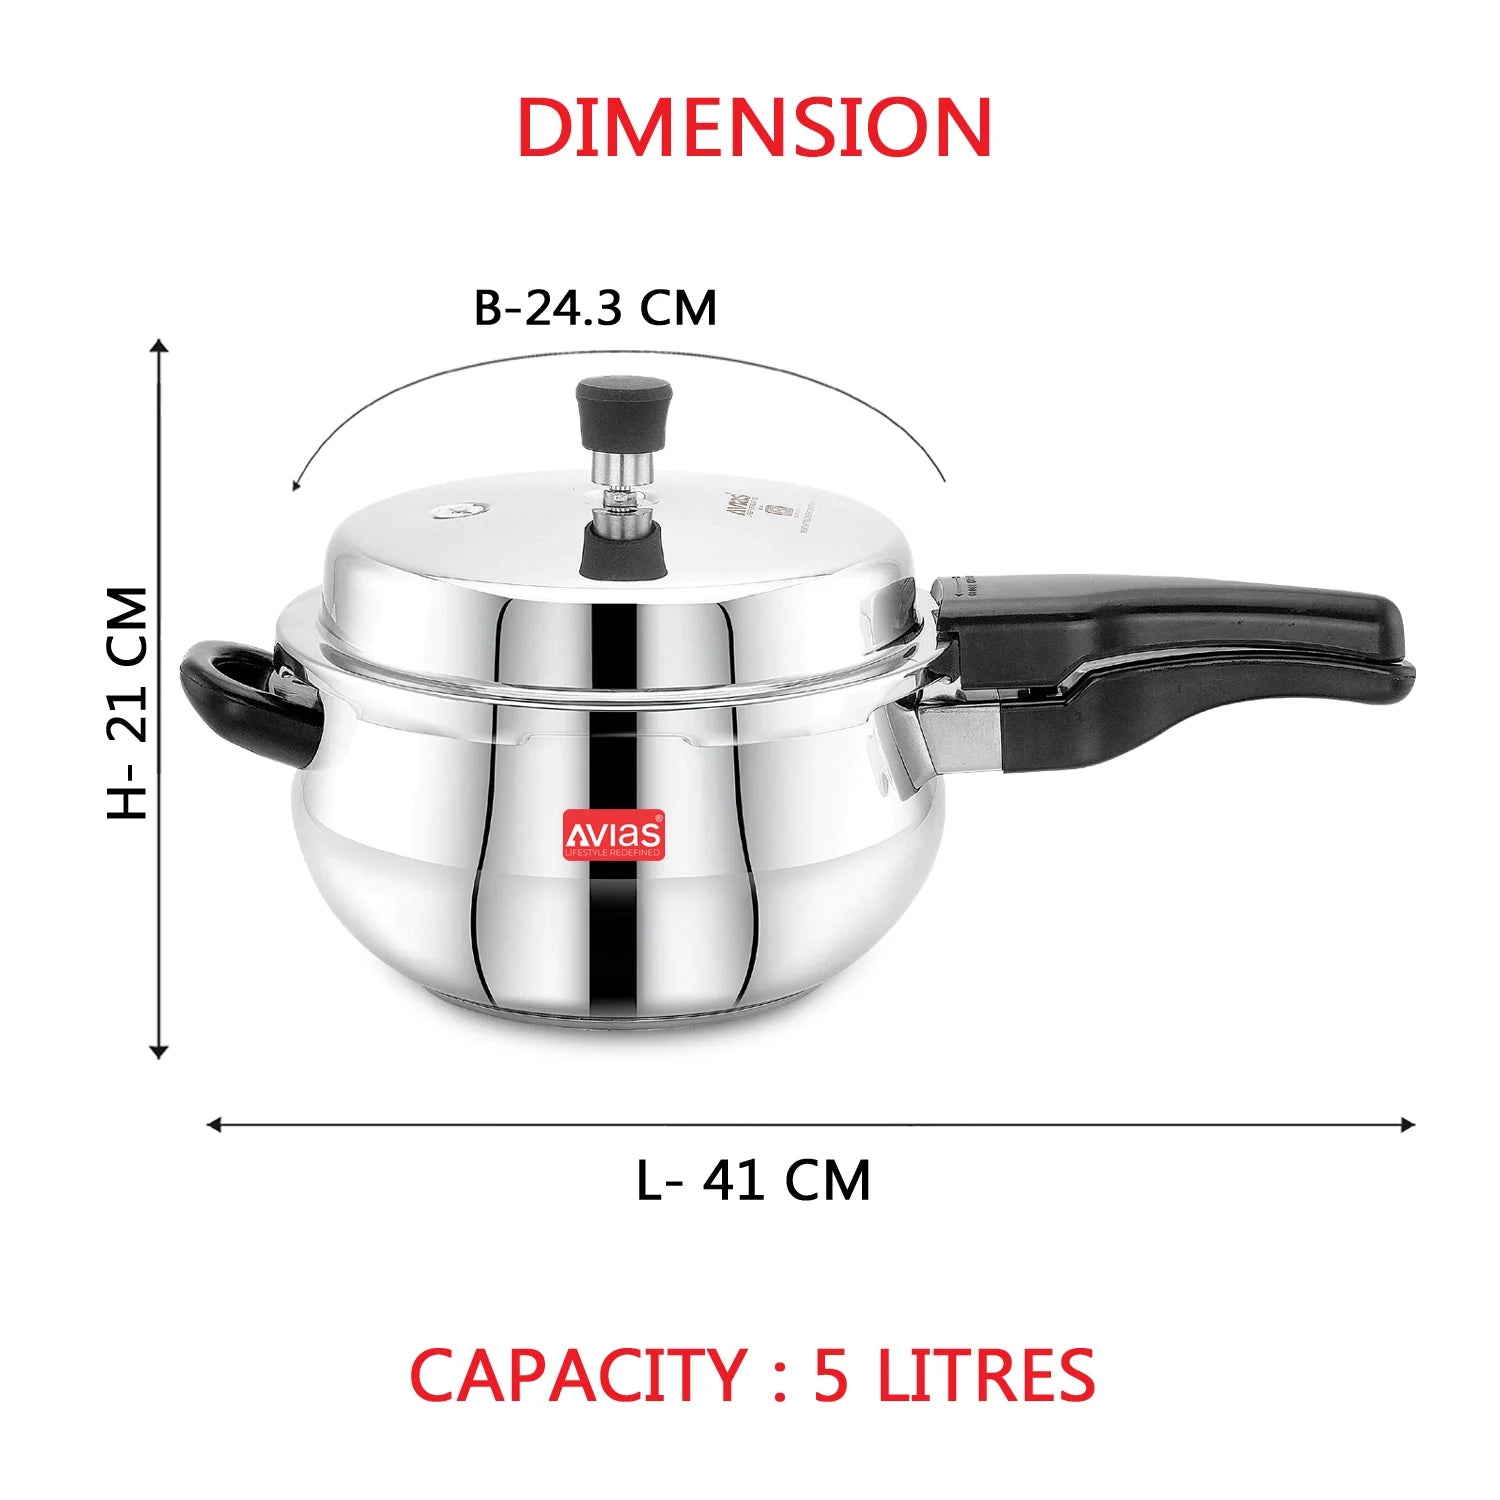 AVIAS Avanti Handi high-quality stainless steel pressure cooker 5 liters